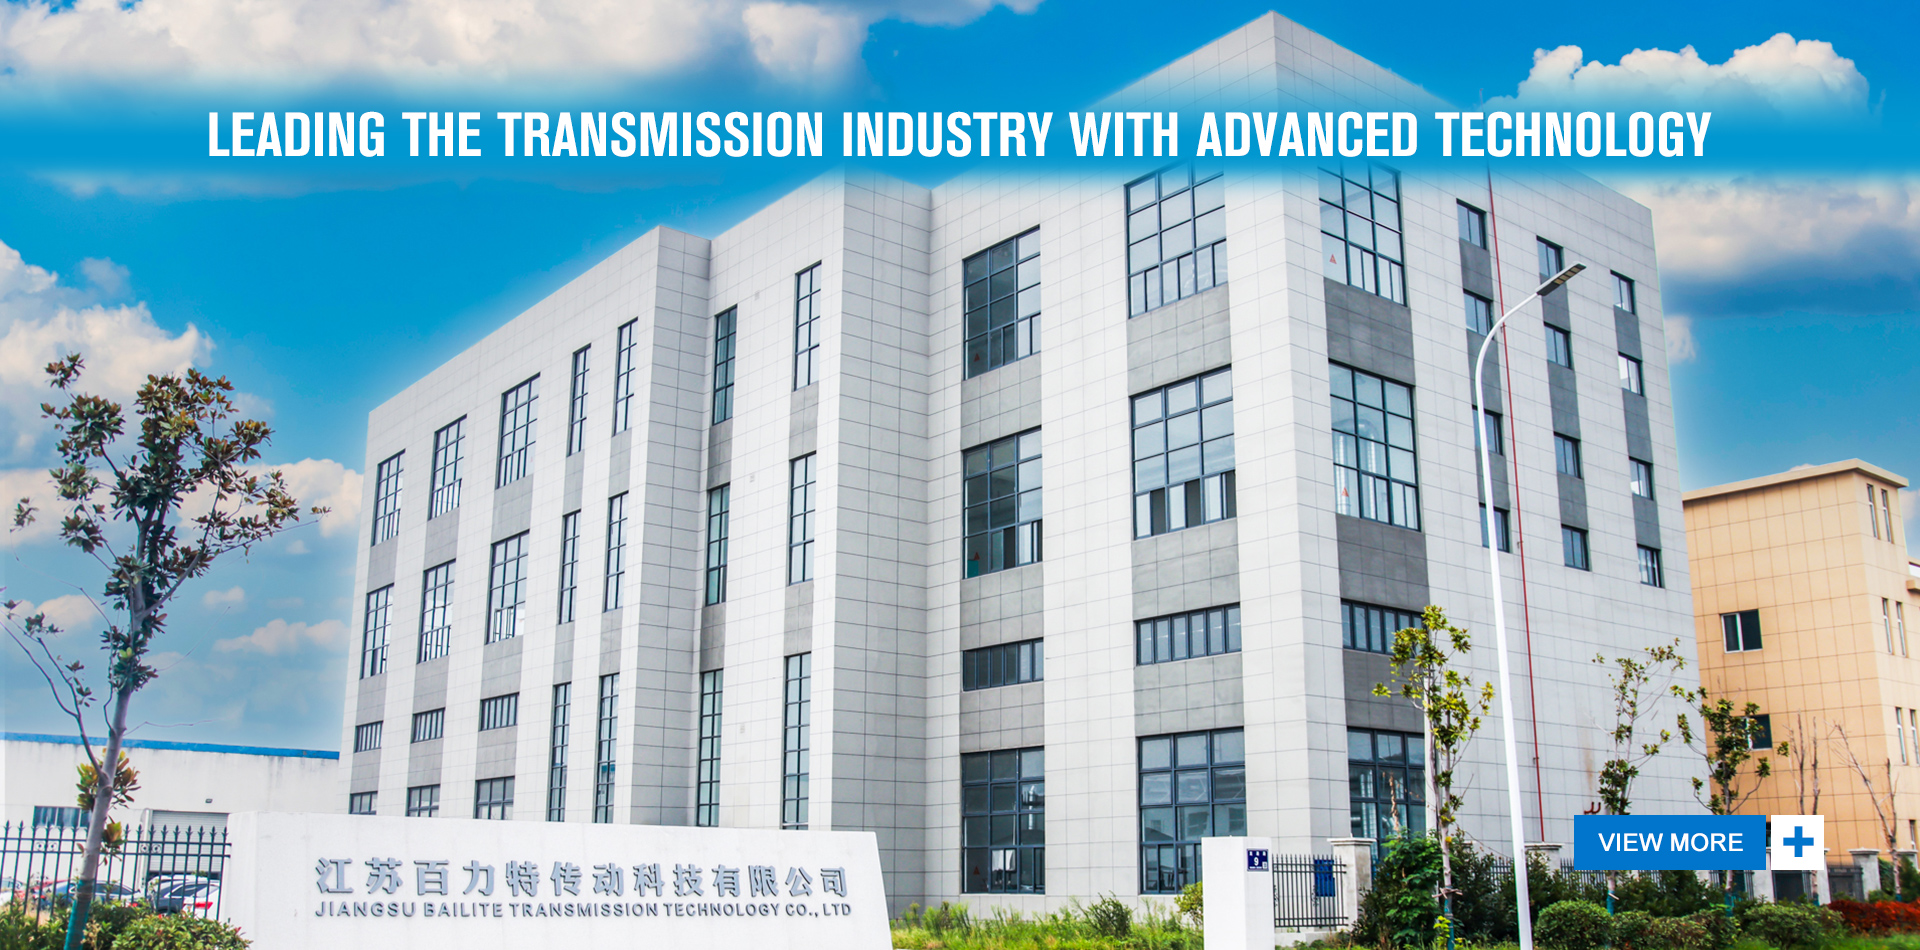 Jiangsu Bailite Transmission Technology Co., Ltd